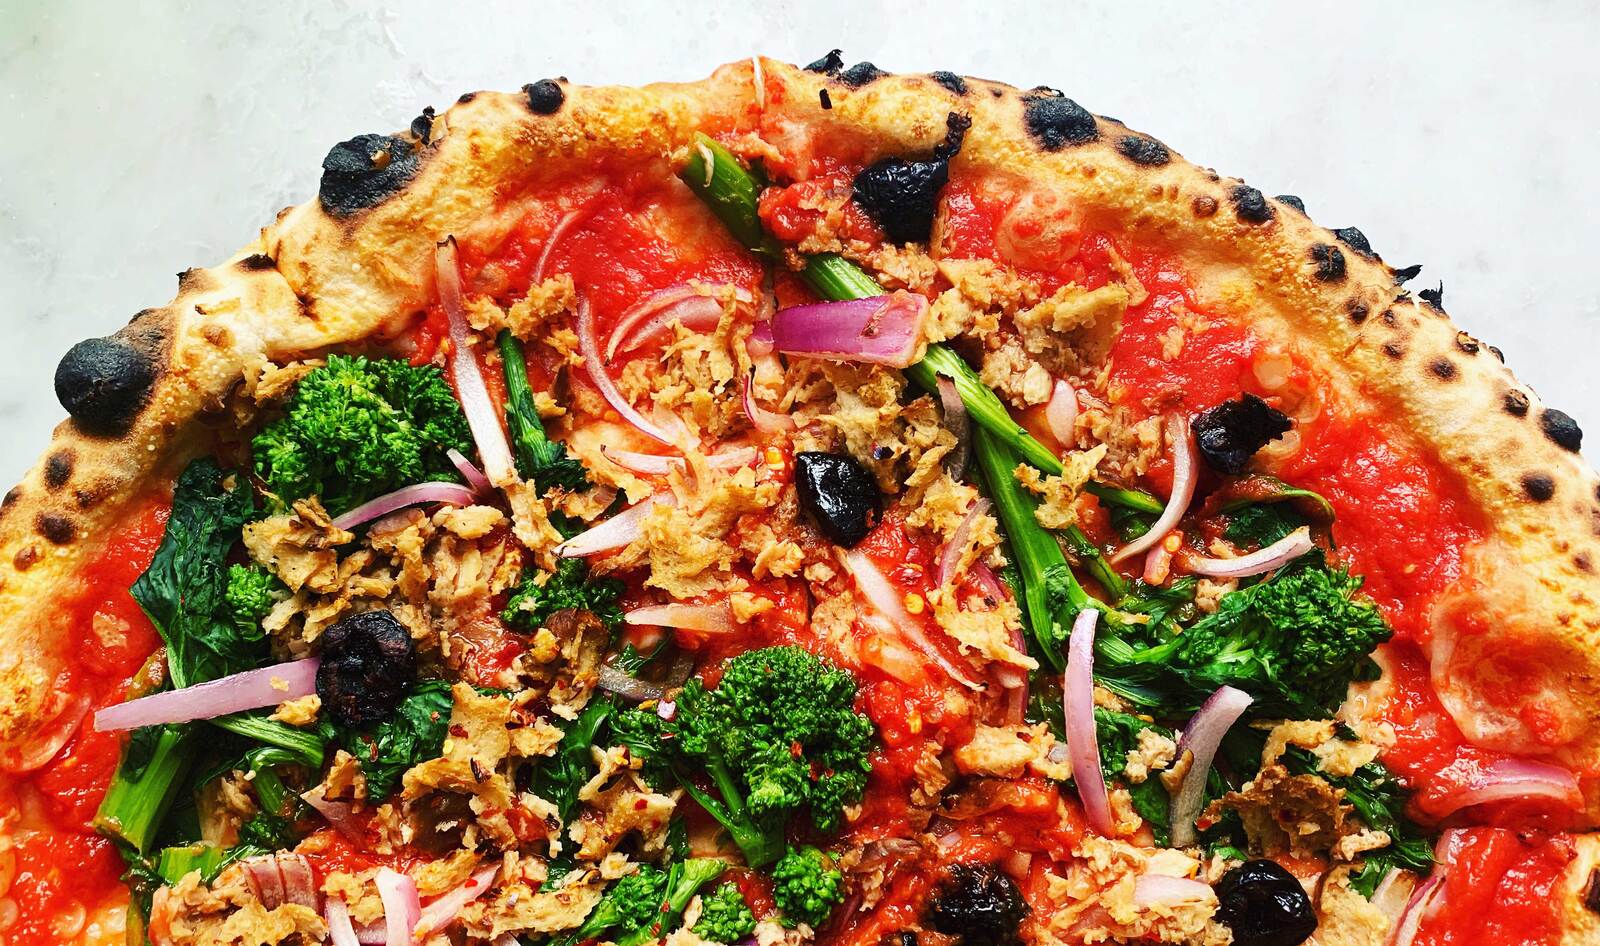 NYC’s Famous Pizza Shop Motorino Now Offers Vegan Italian Sausage